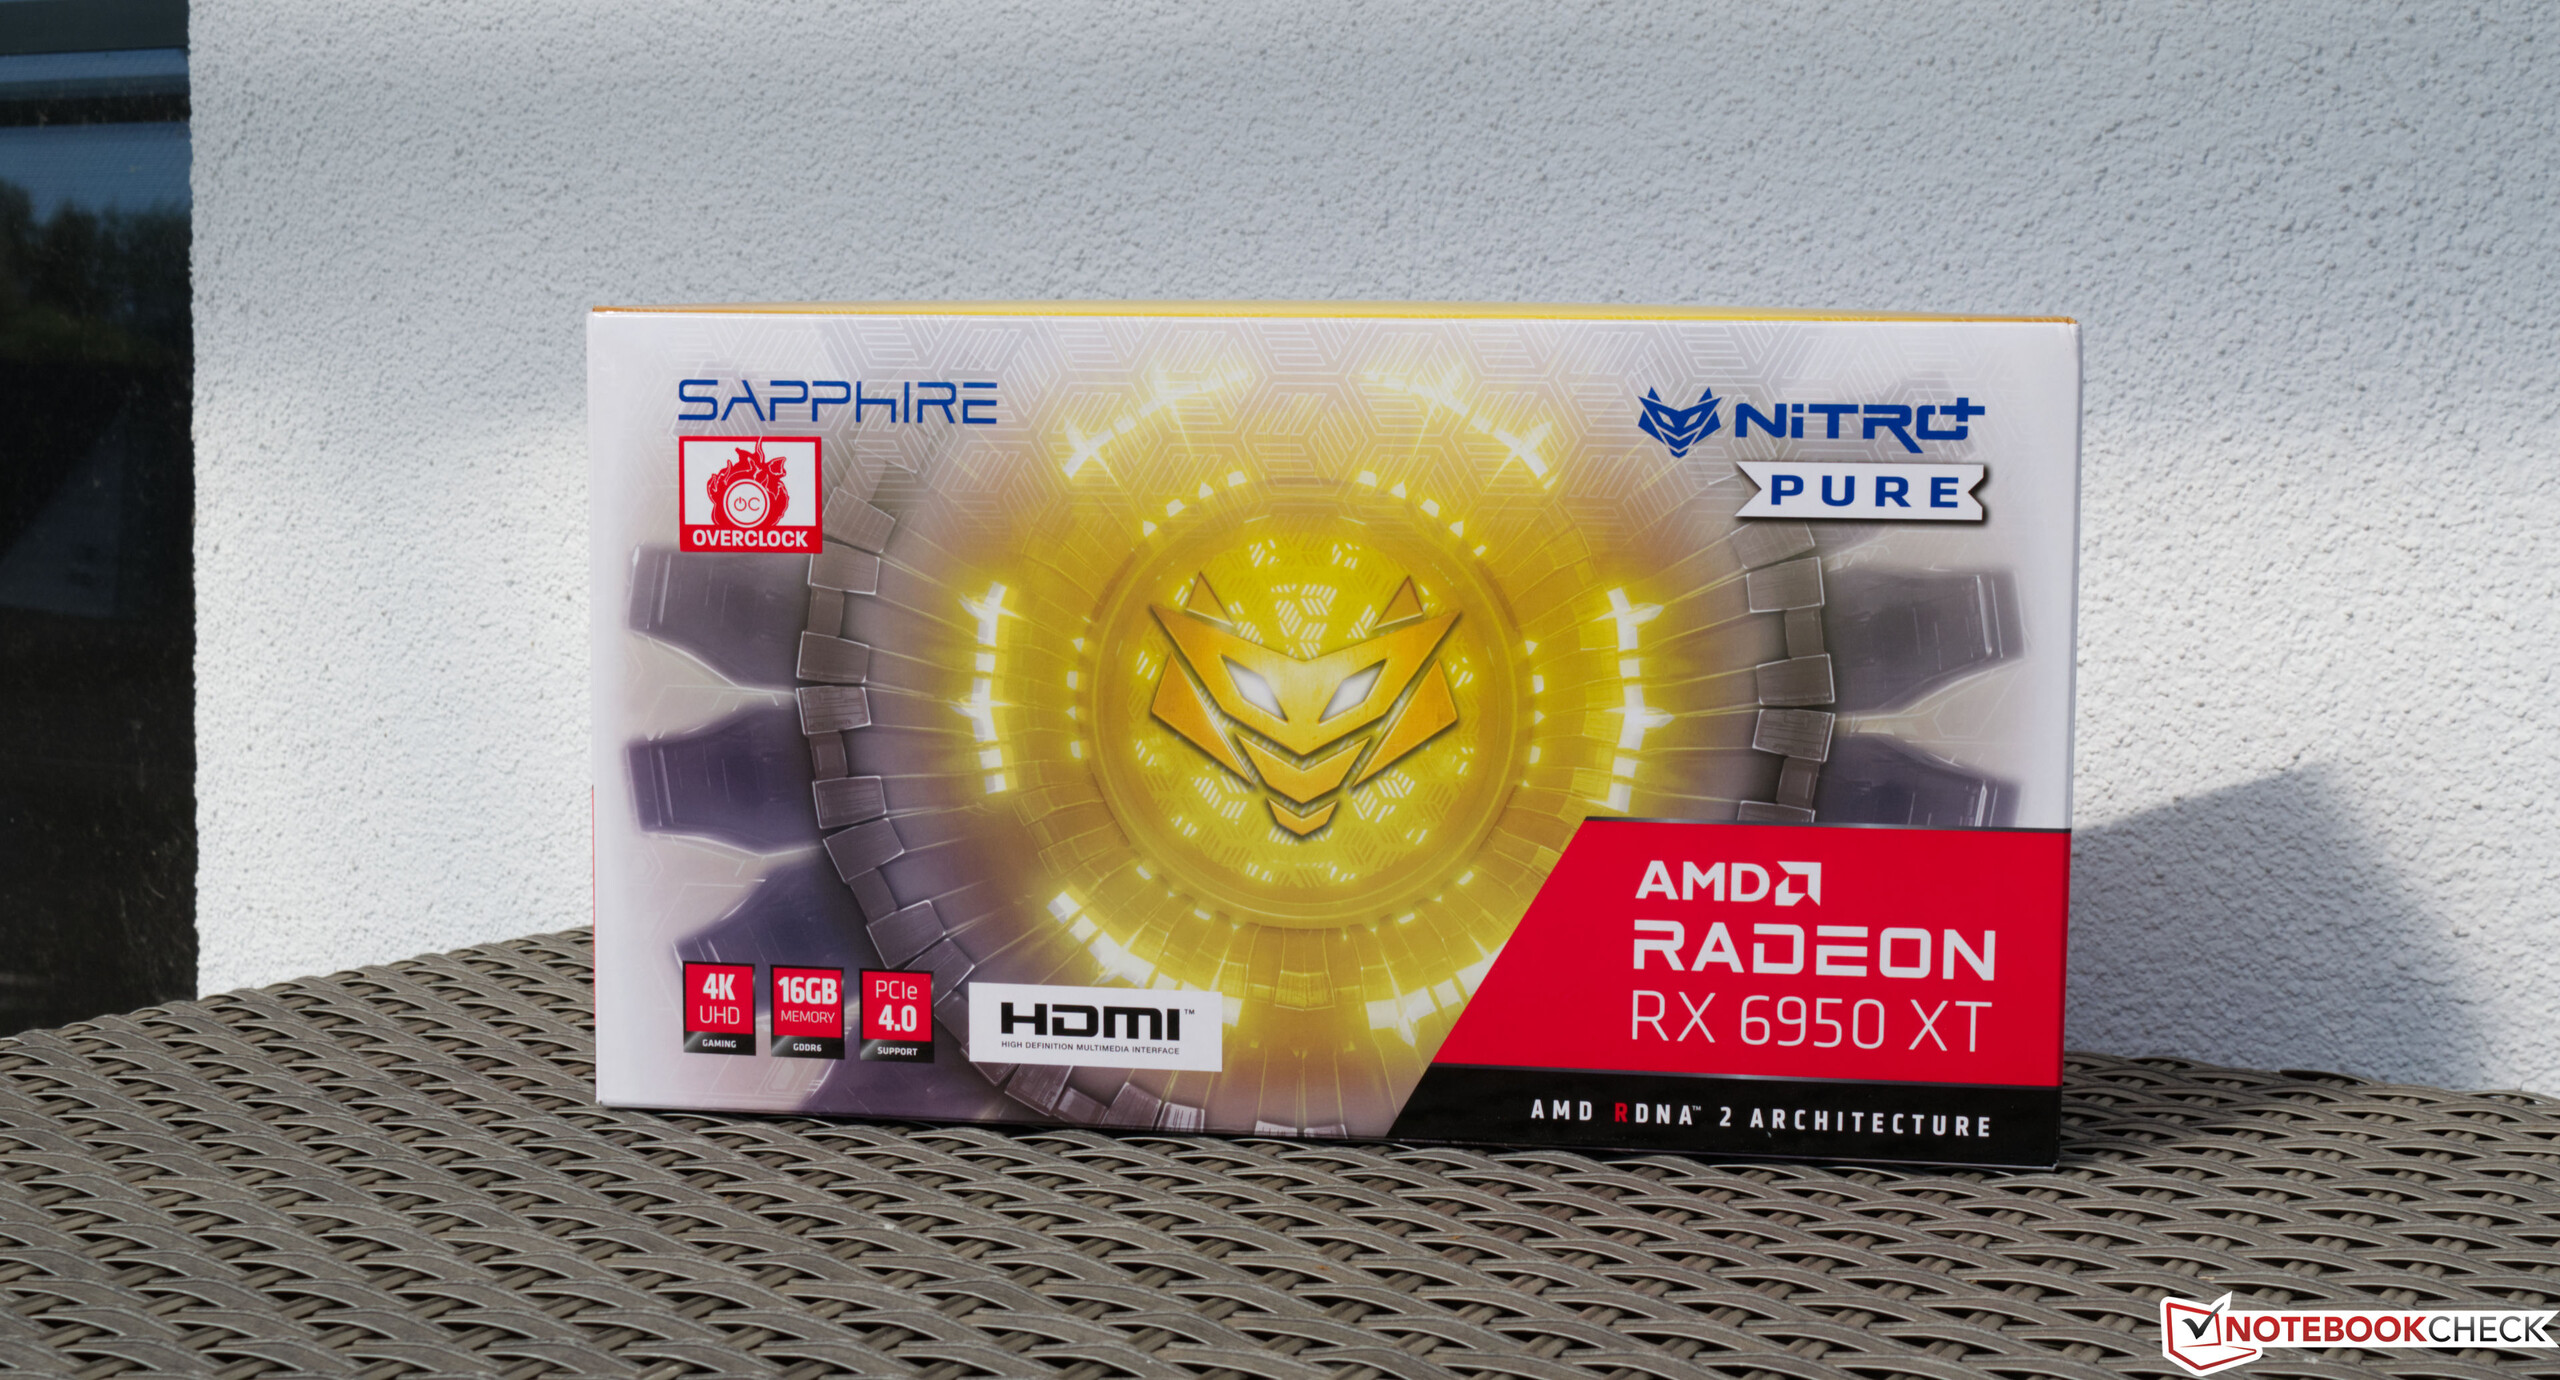 Recension av AMD Radeon RX 6950 XT desktop GPU: AMD:s toppmodell utmanar  GeForce RTX 3090 Ti 